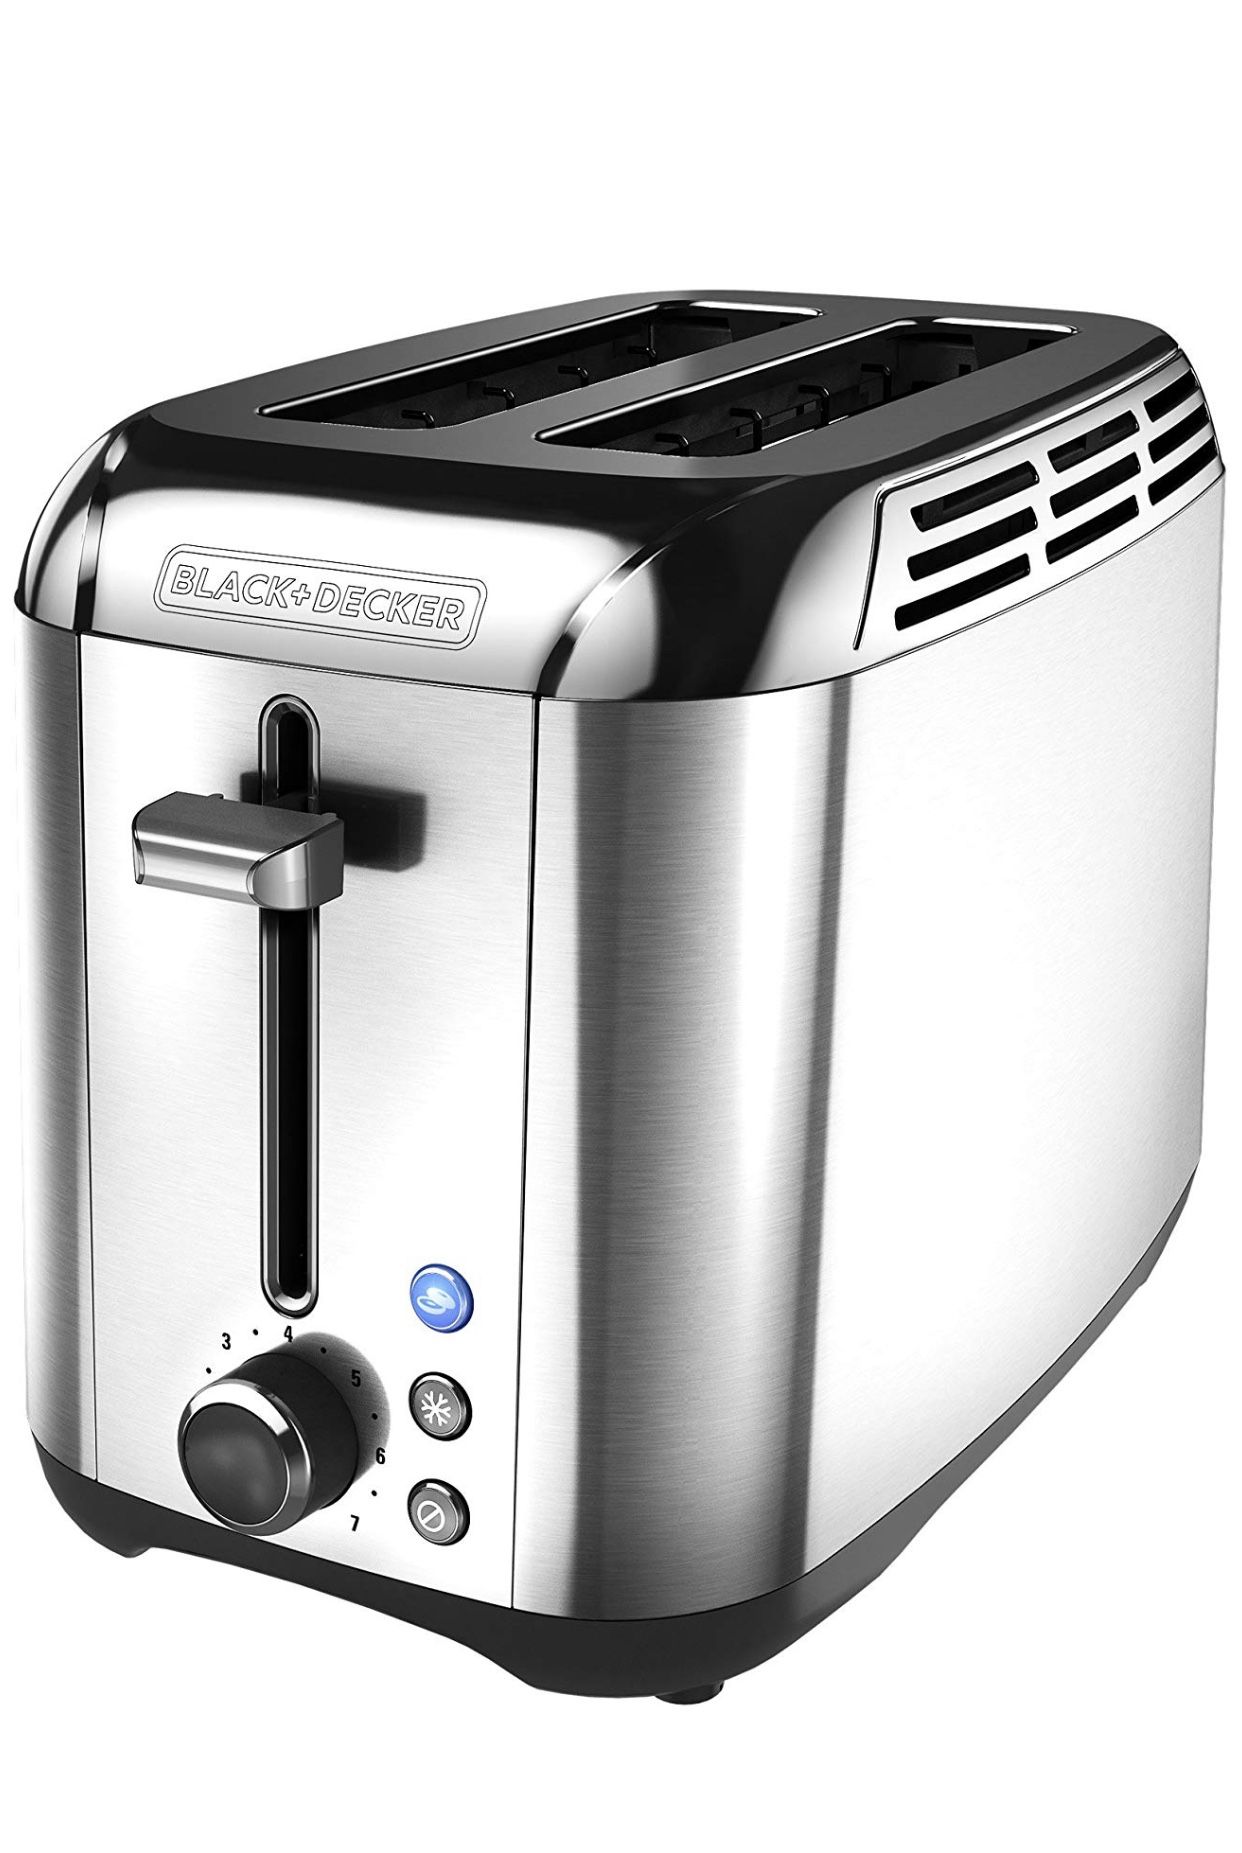 Black+Decker TR3500SD Bread toaster, Silver BRAND NEW